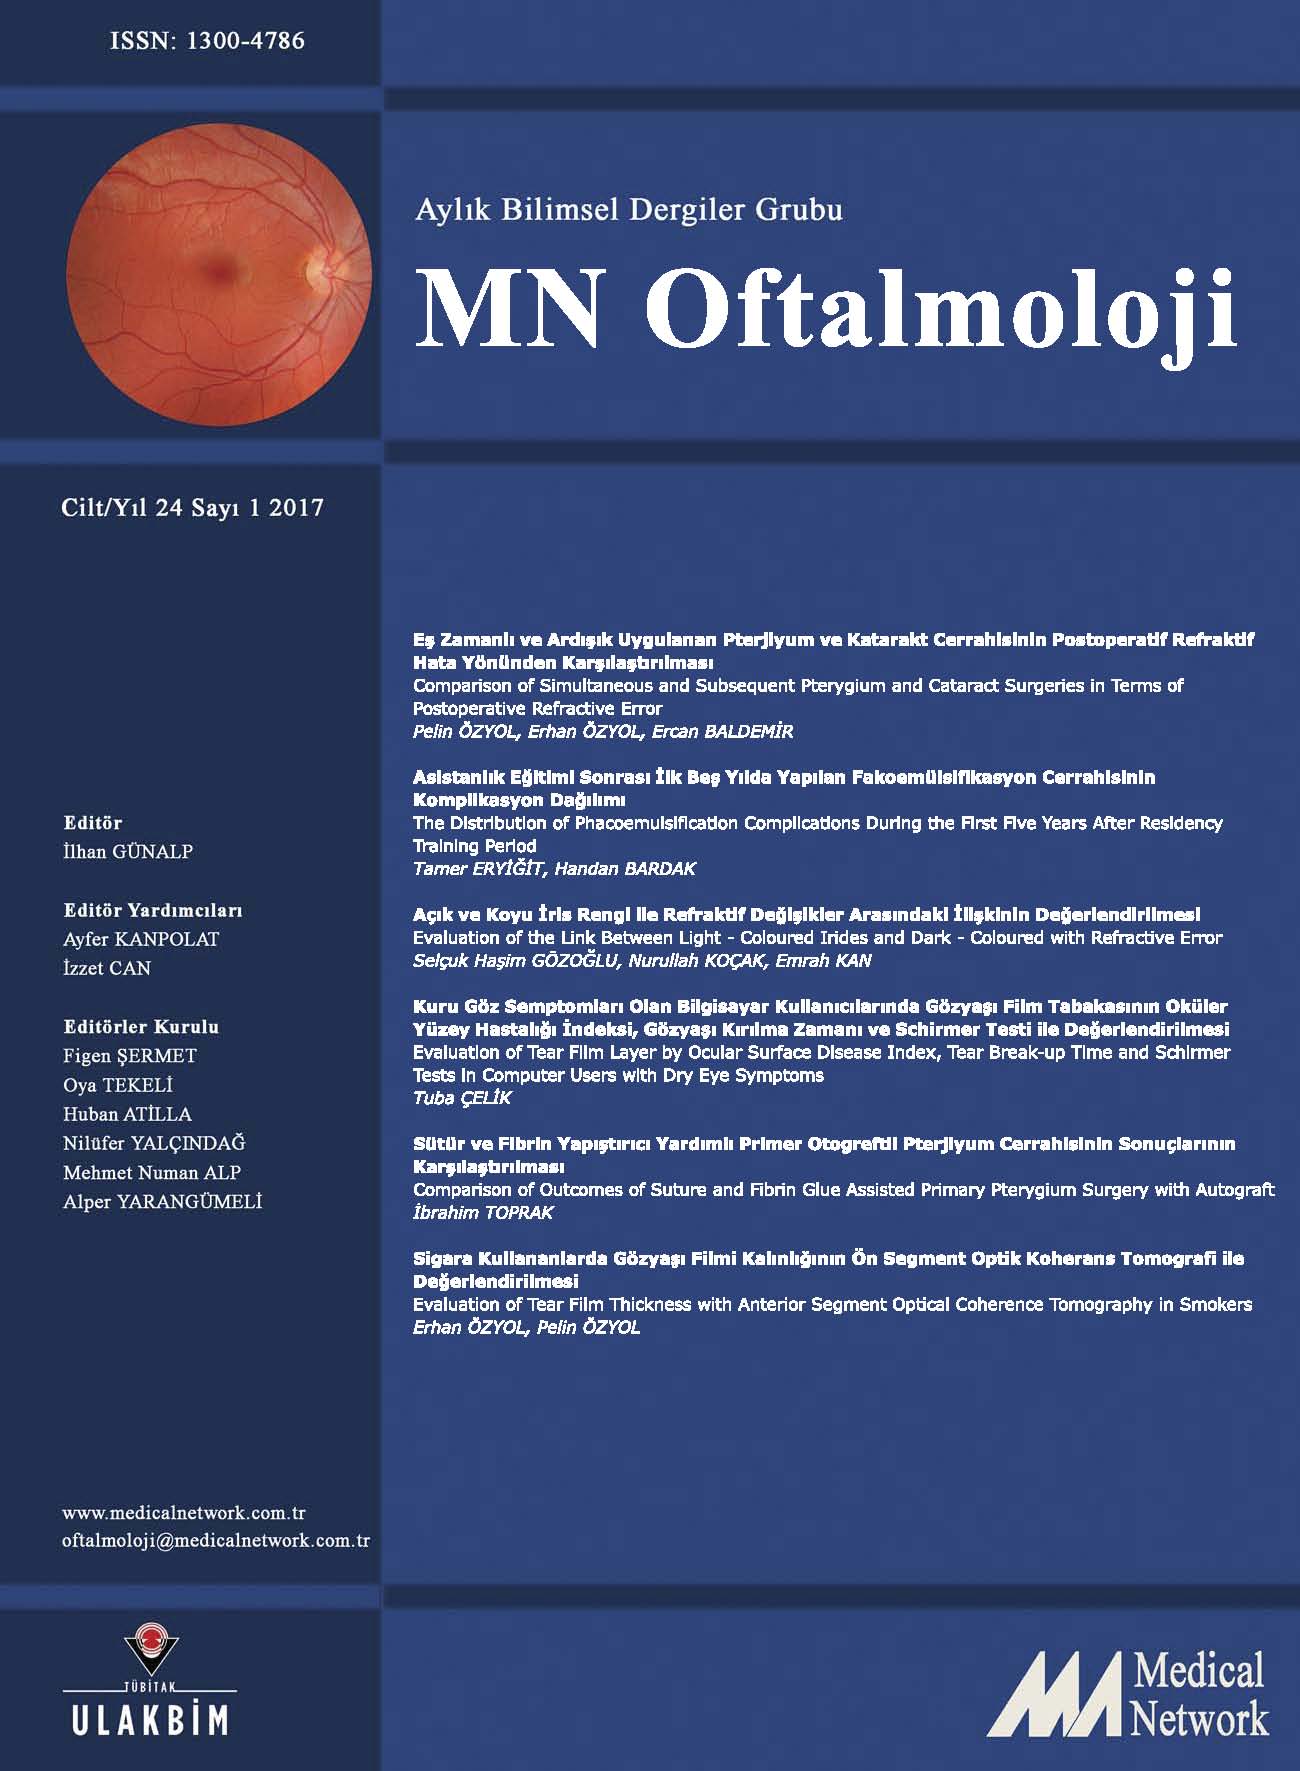 <p>MN Oftalmoloji Cilt: 24 Sayı: 1 2017 (MN Ophthalmology Volume: 24 No 1 2017)</p>